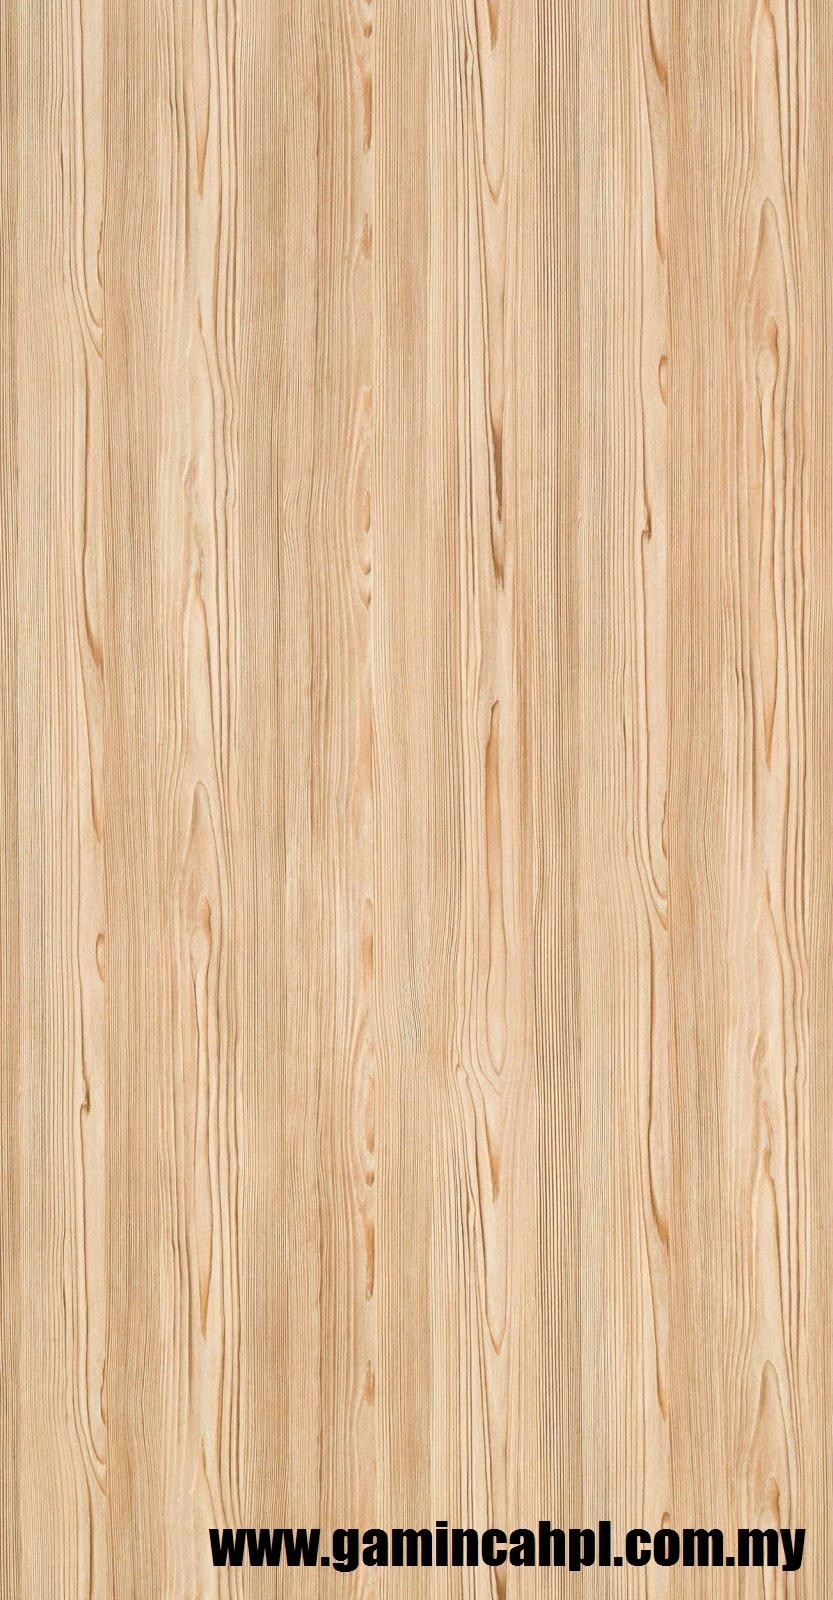 GM10-8090 CITI PINE Authentic Wood Series Laminate Flooring Choose Sample / Pattern Chart